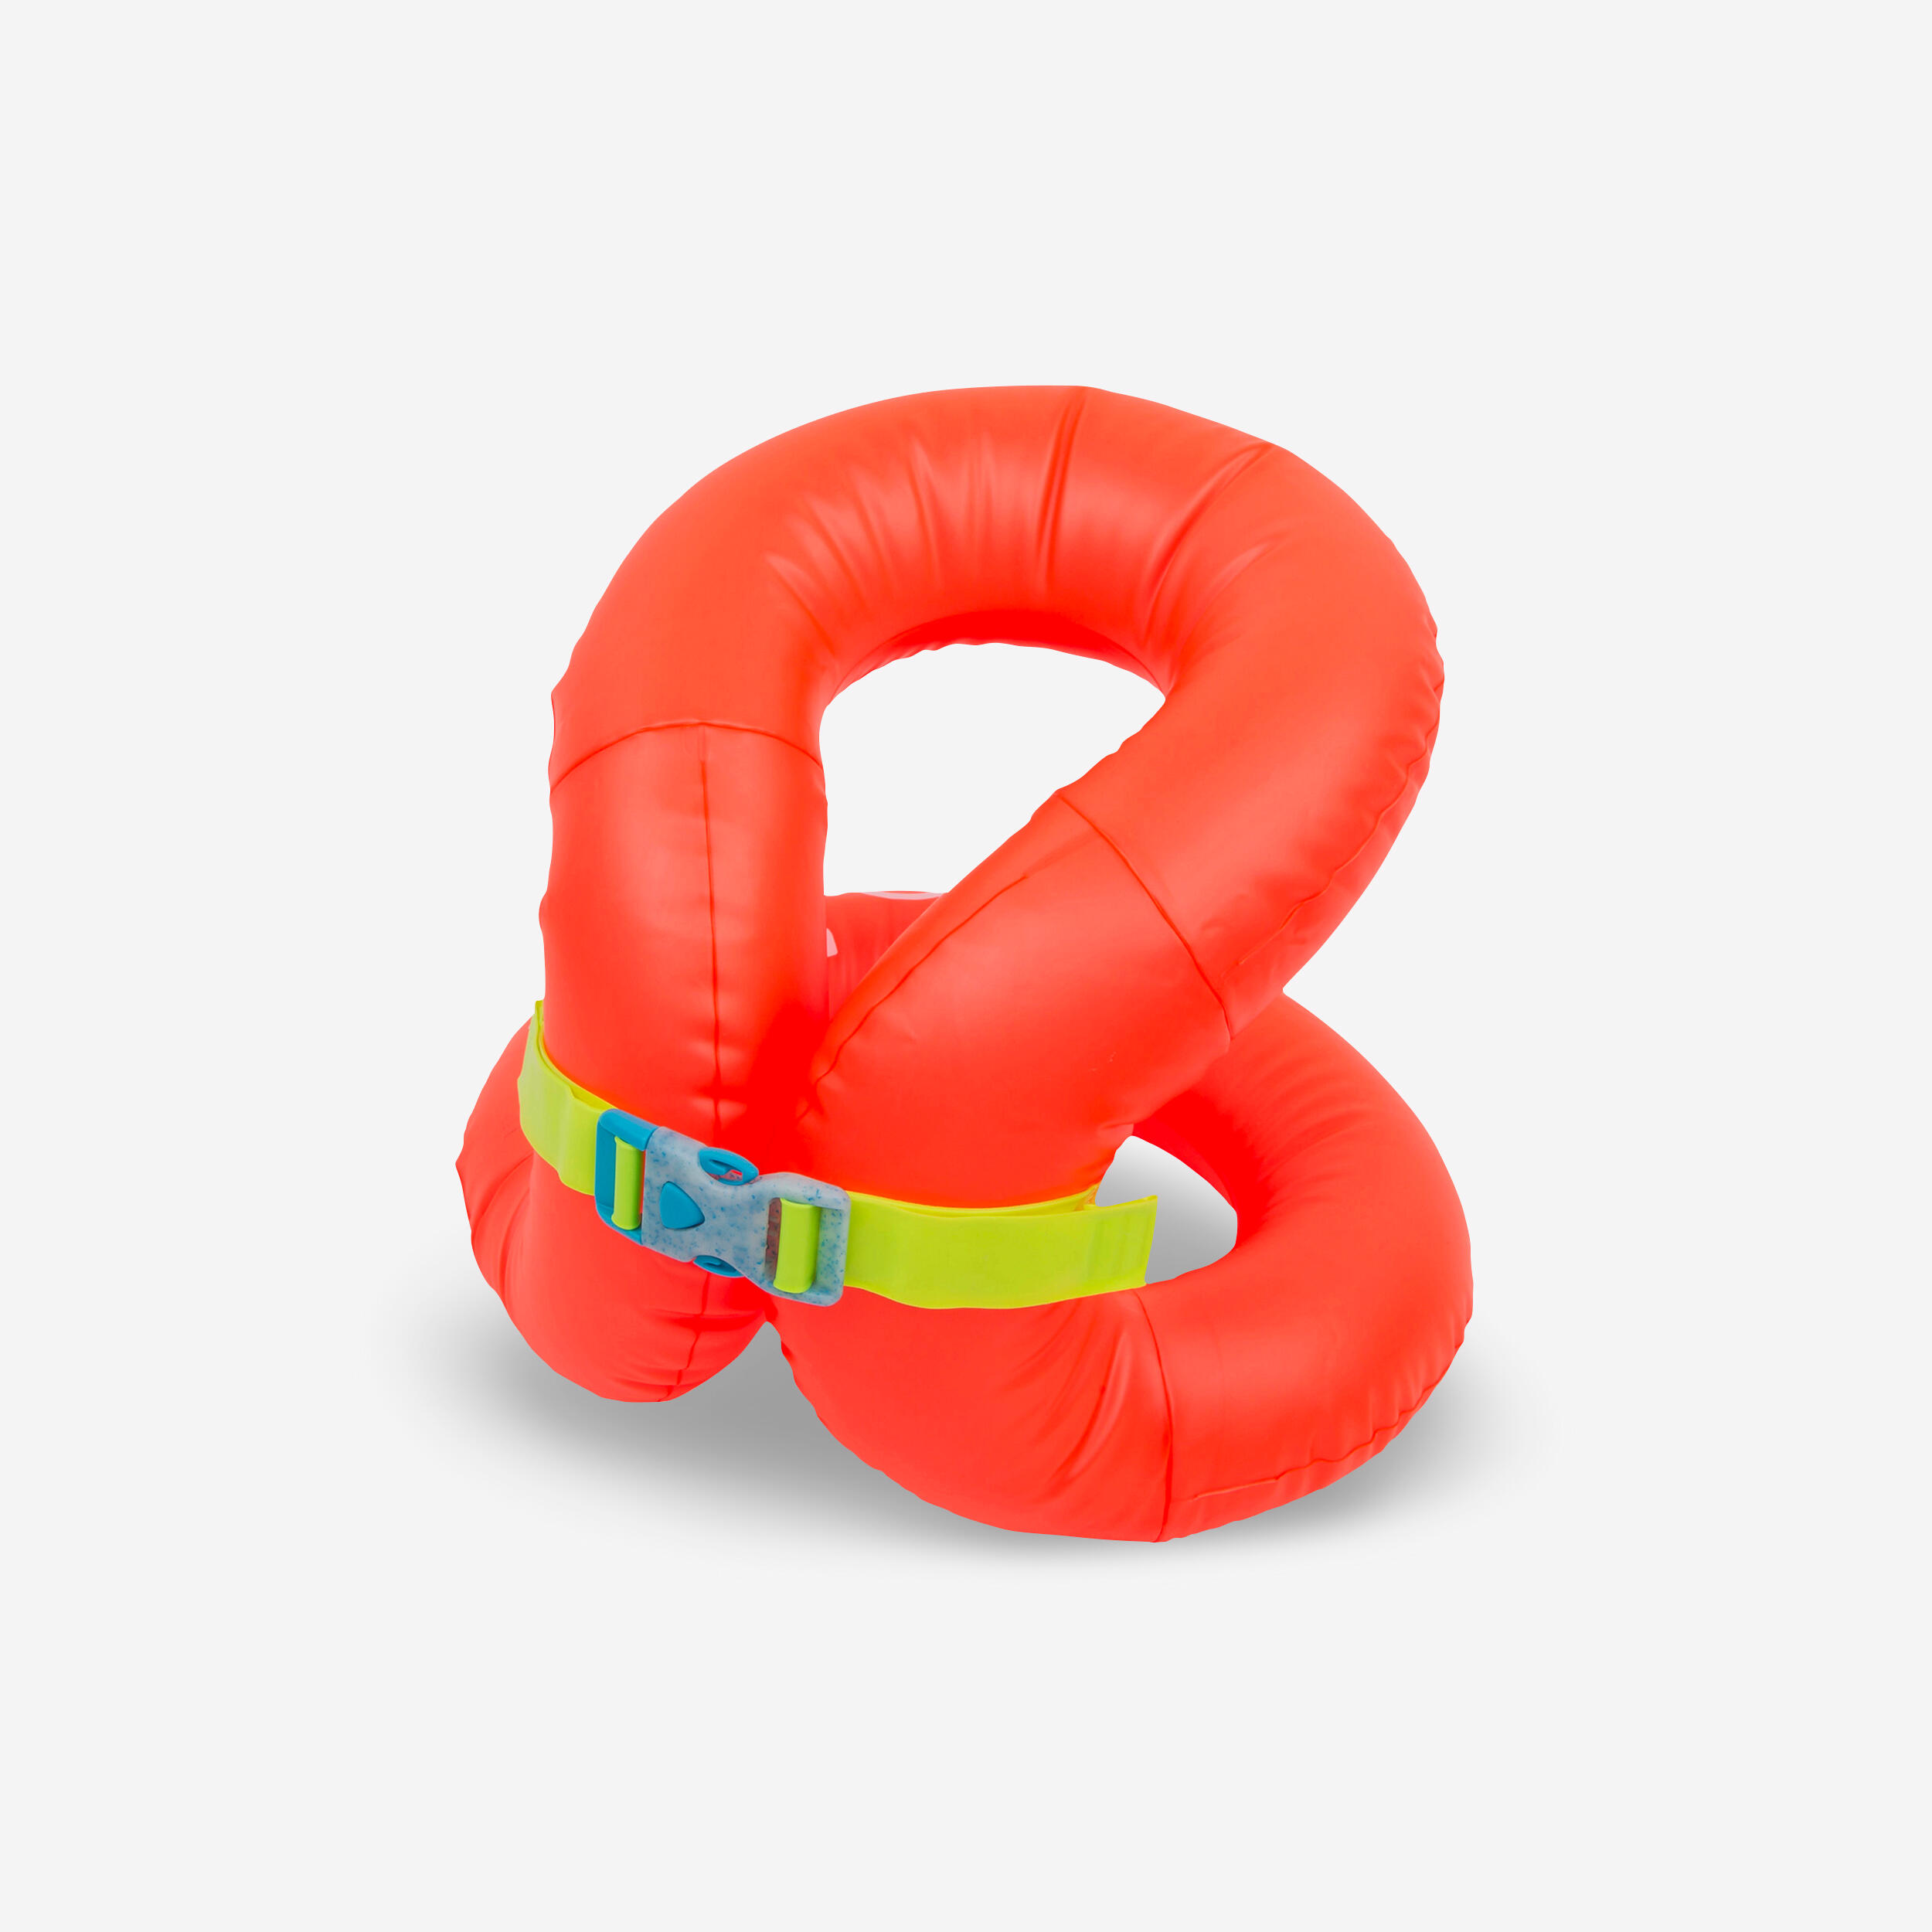 Swimming inflatable life vest for 18-30 kg - orange